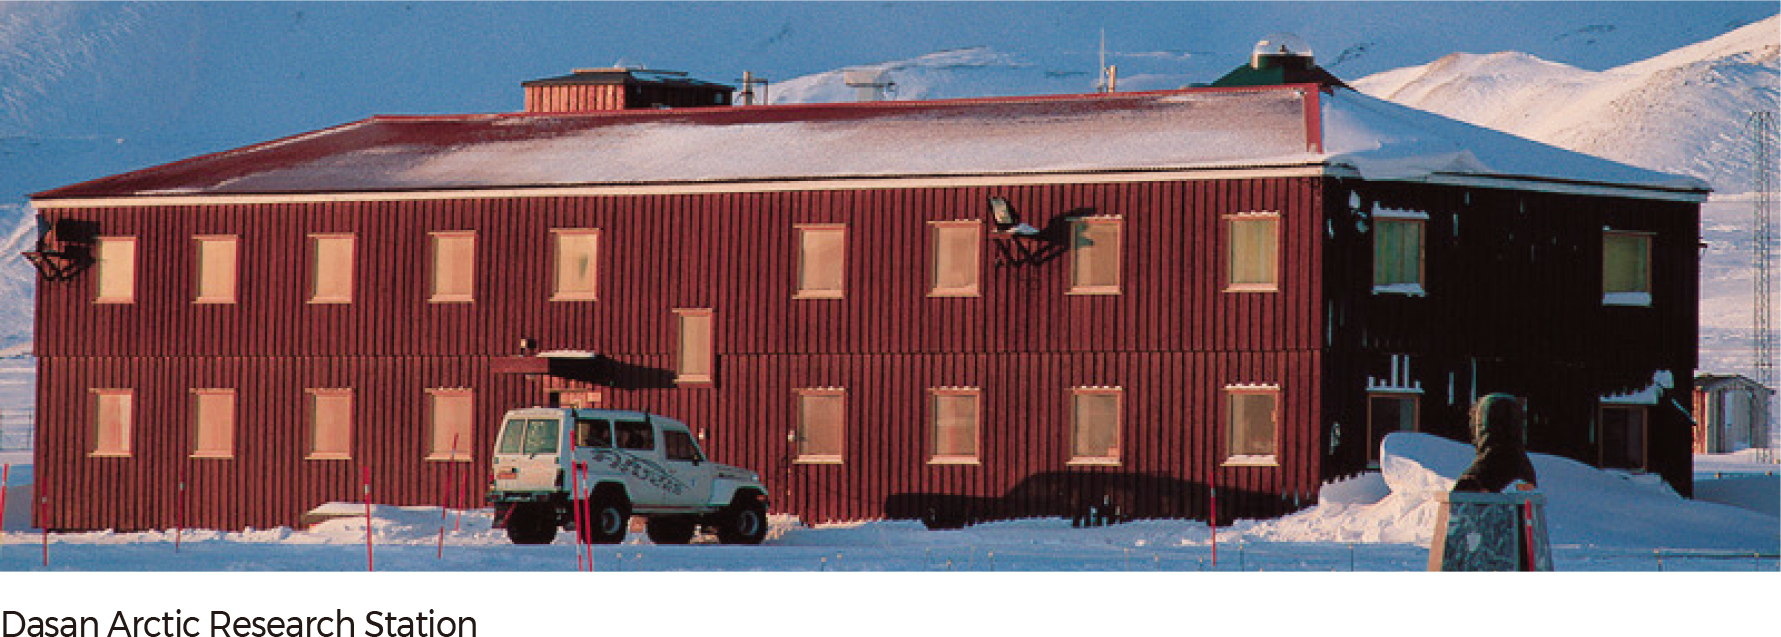 Dasan Arctic Research Station